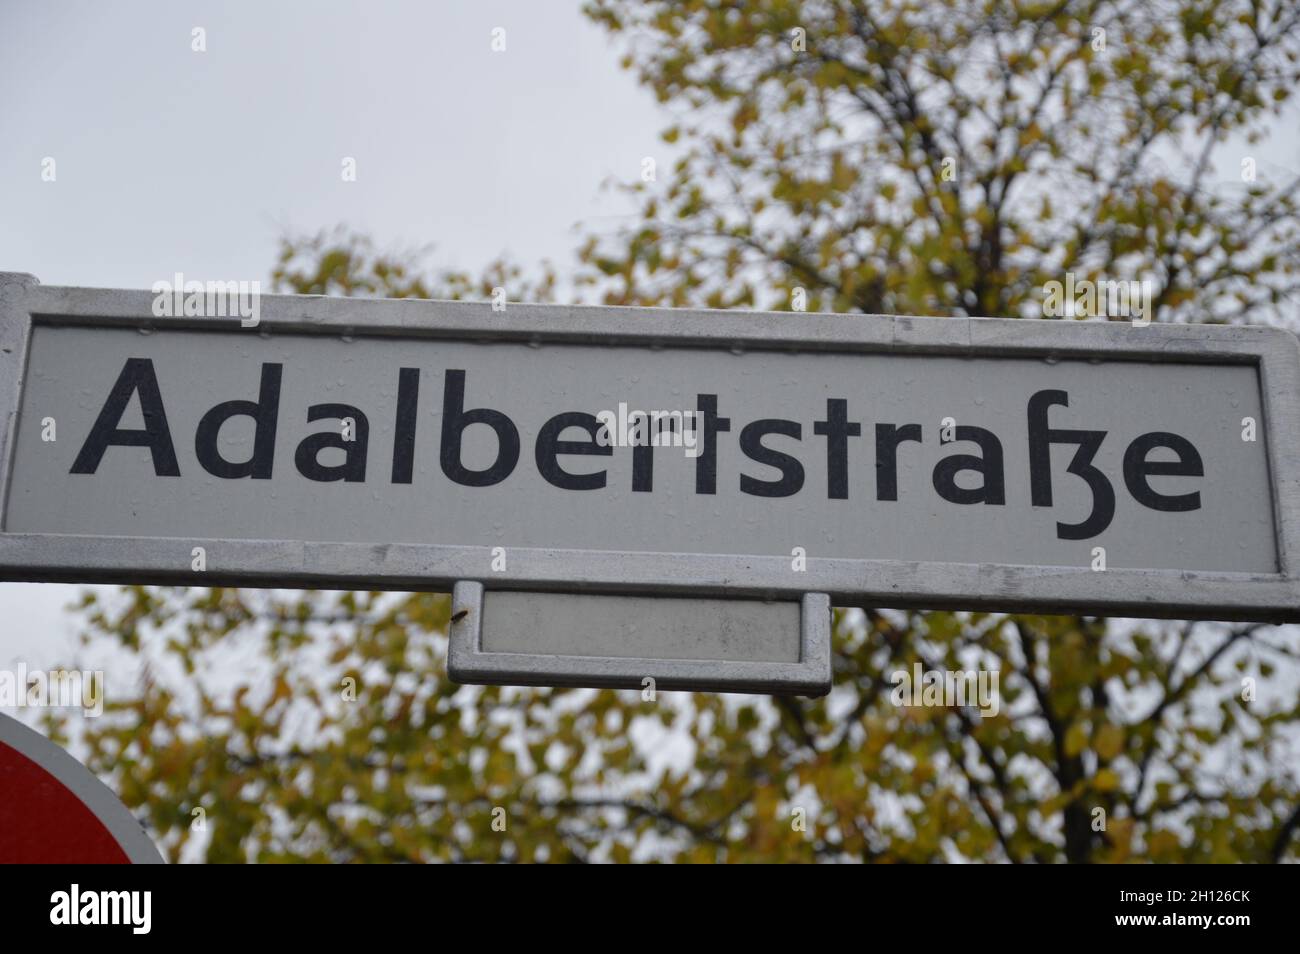 Adalbertstrasse street sign in Mitte, Berlin, Germany - October 15, 2021. Stock Photo